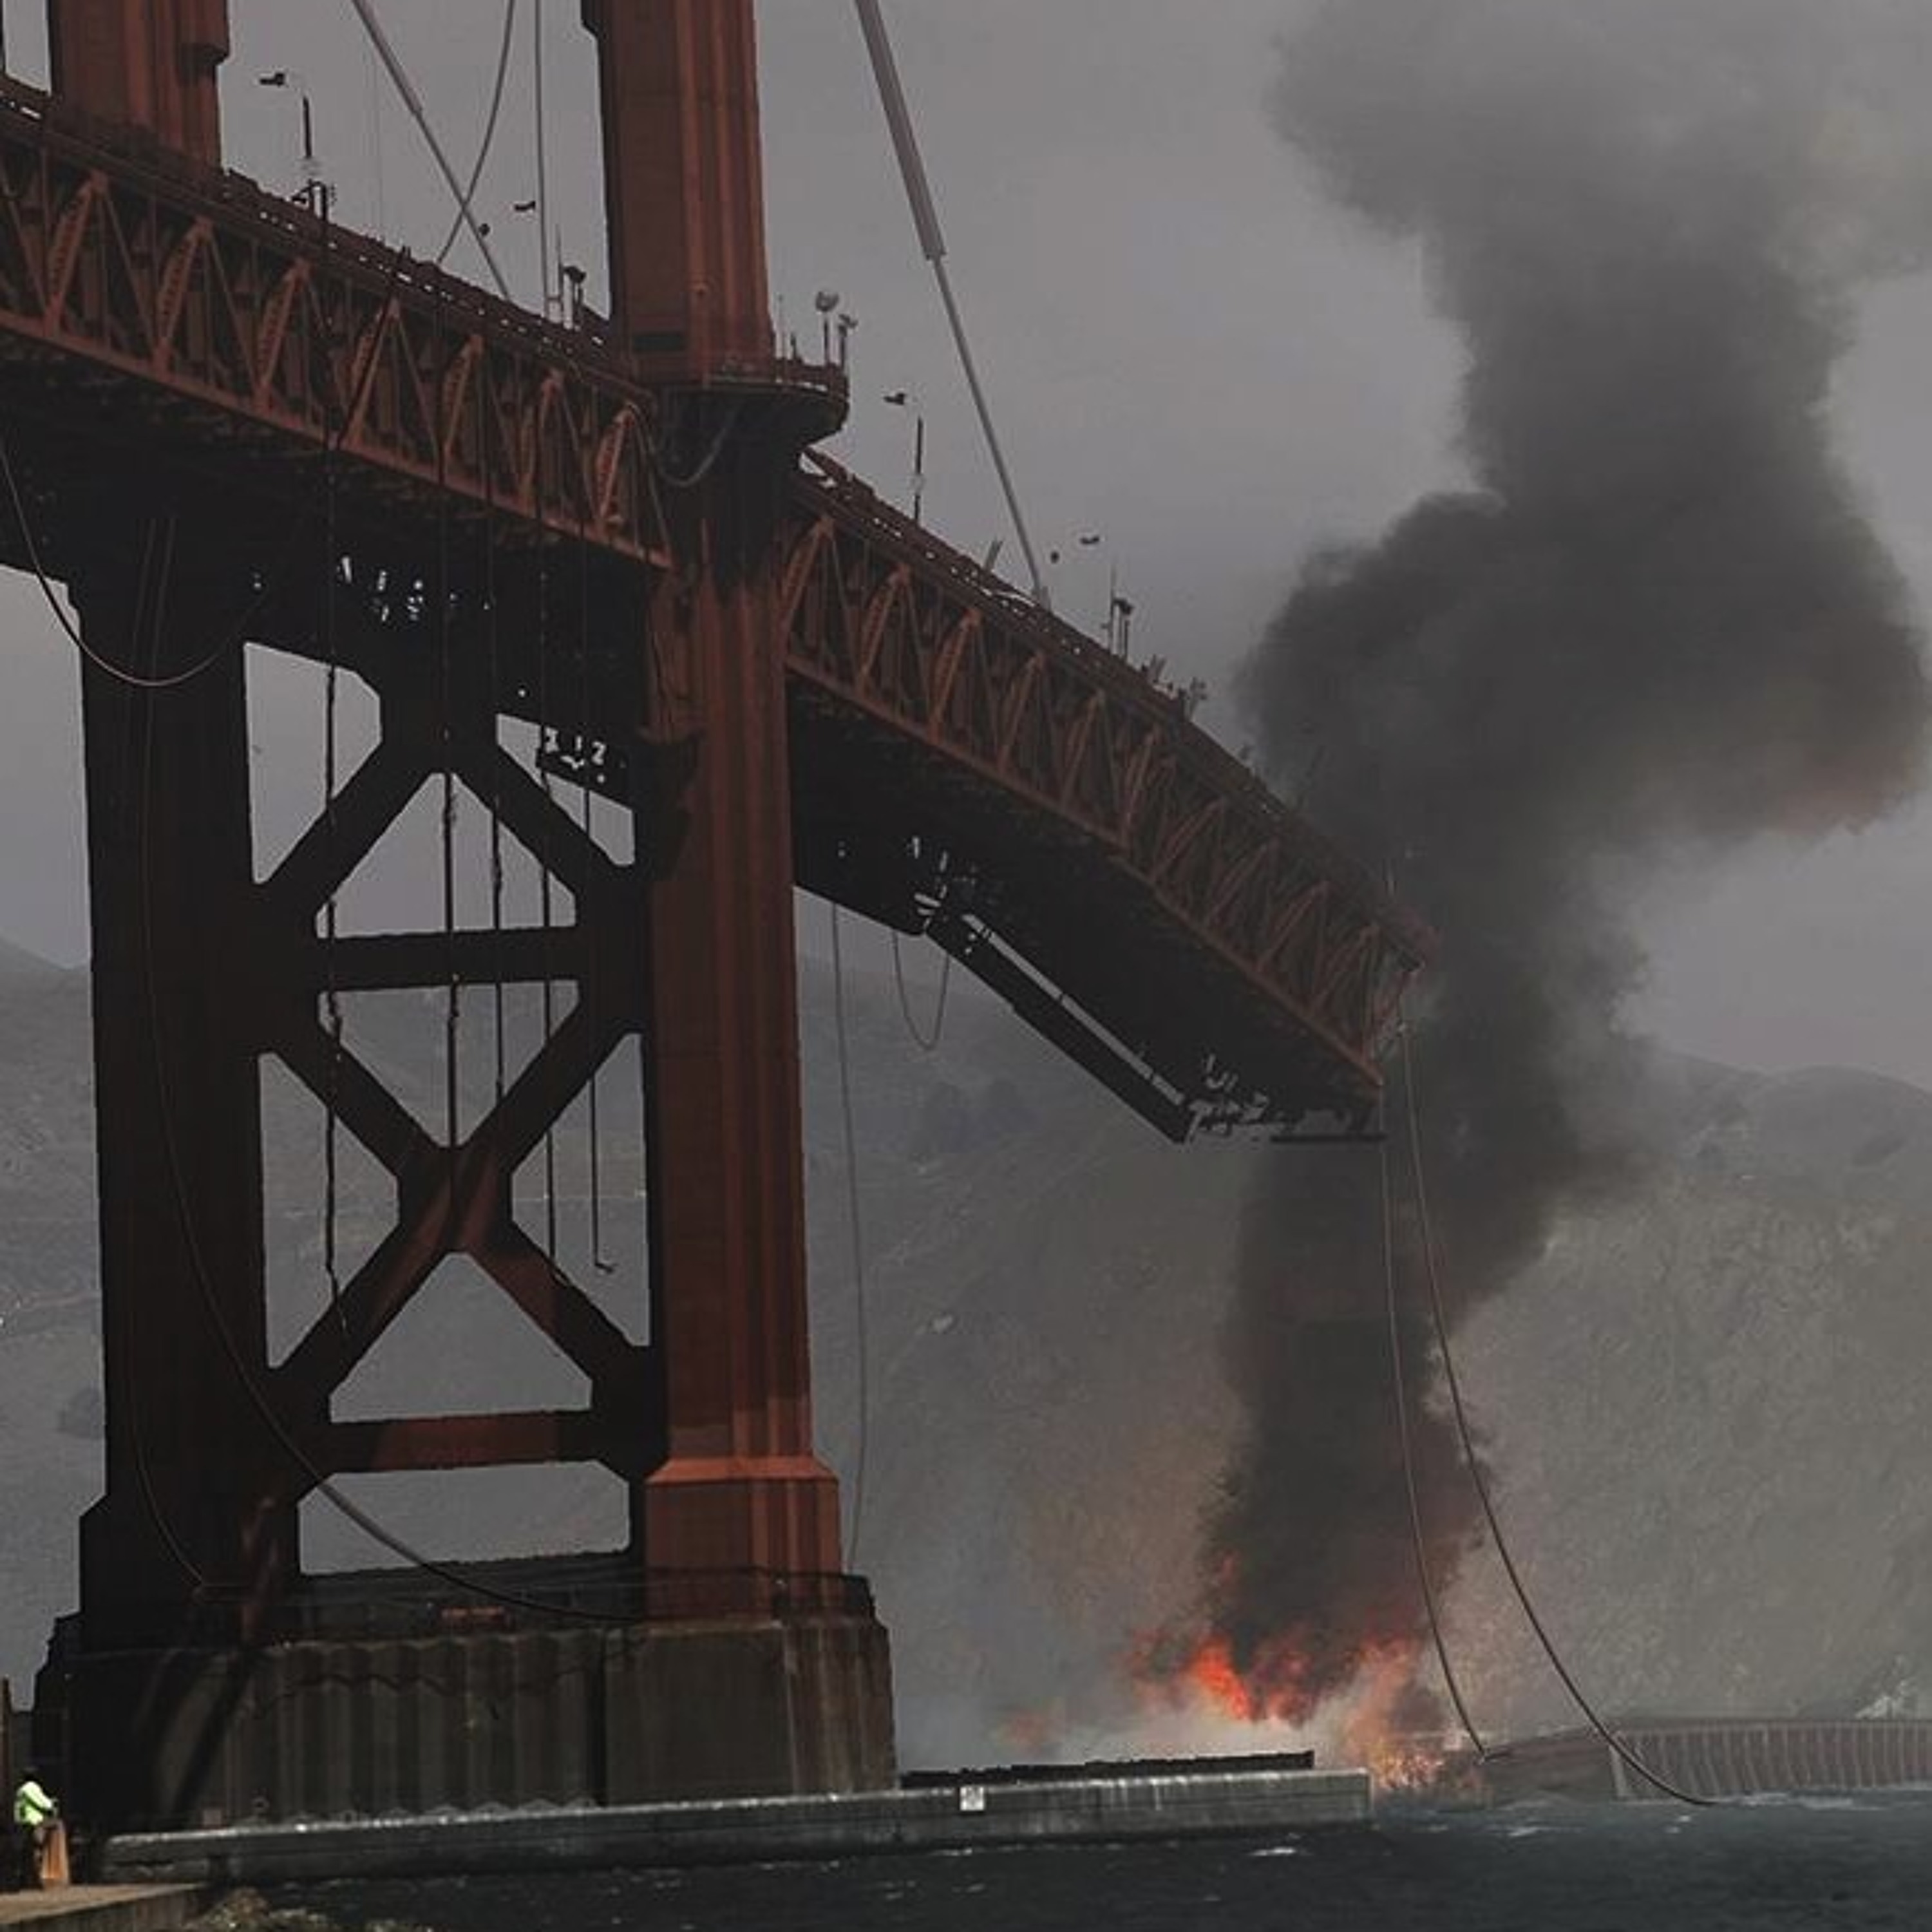 Разбитый мост. Разрушенный мост в Сан Франциско. Мост золотые ворота в Сан-Франциско. Мост золотые ворота разрушенный. Разрушение моста.